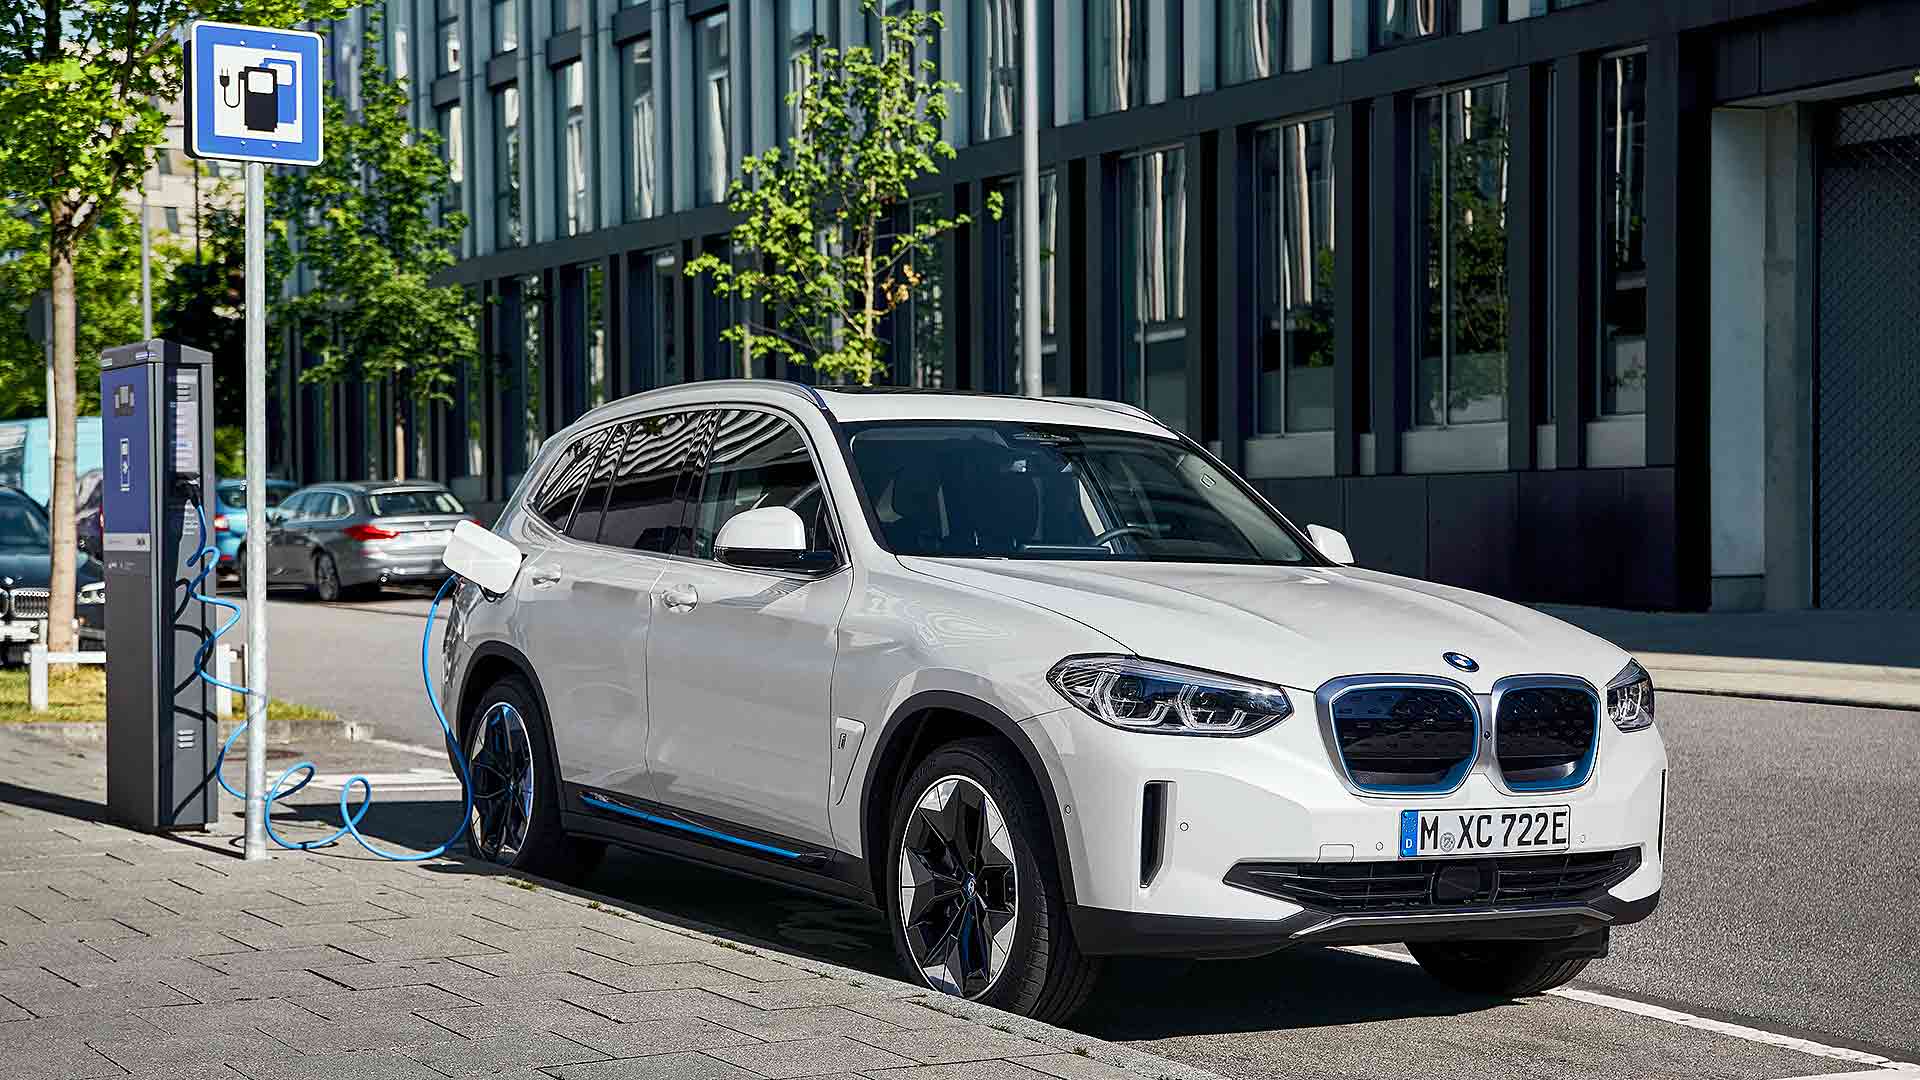 New BMW ix3 electric SUV